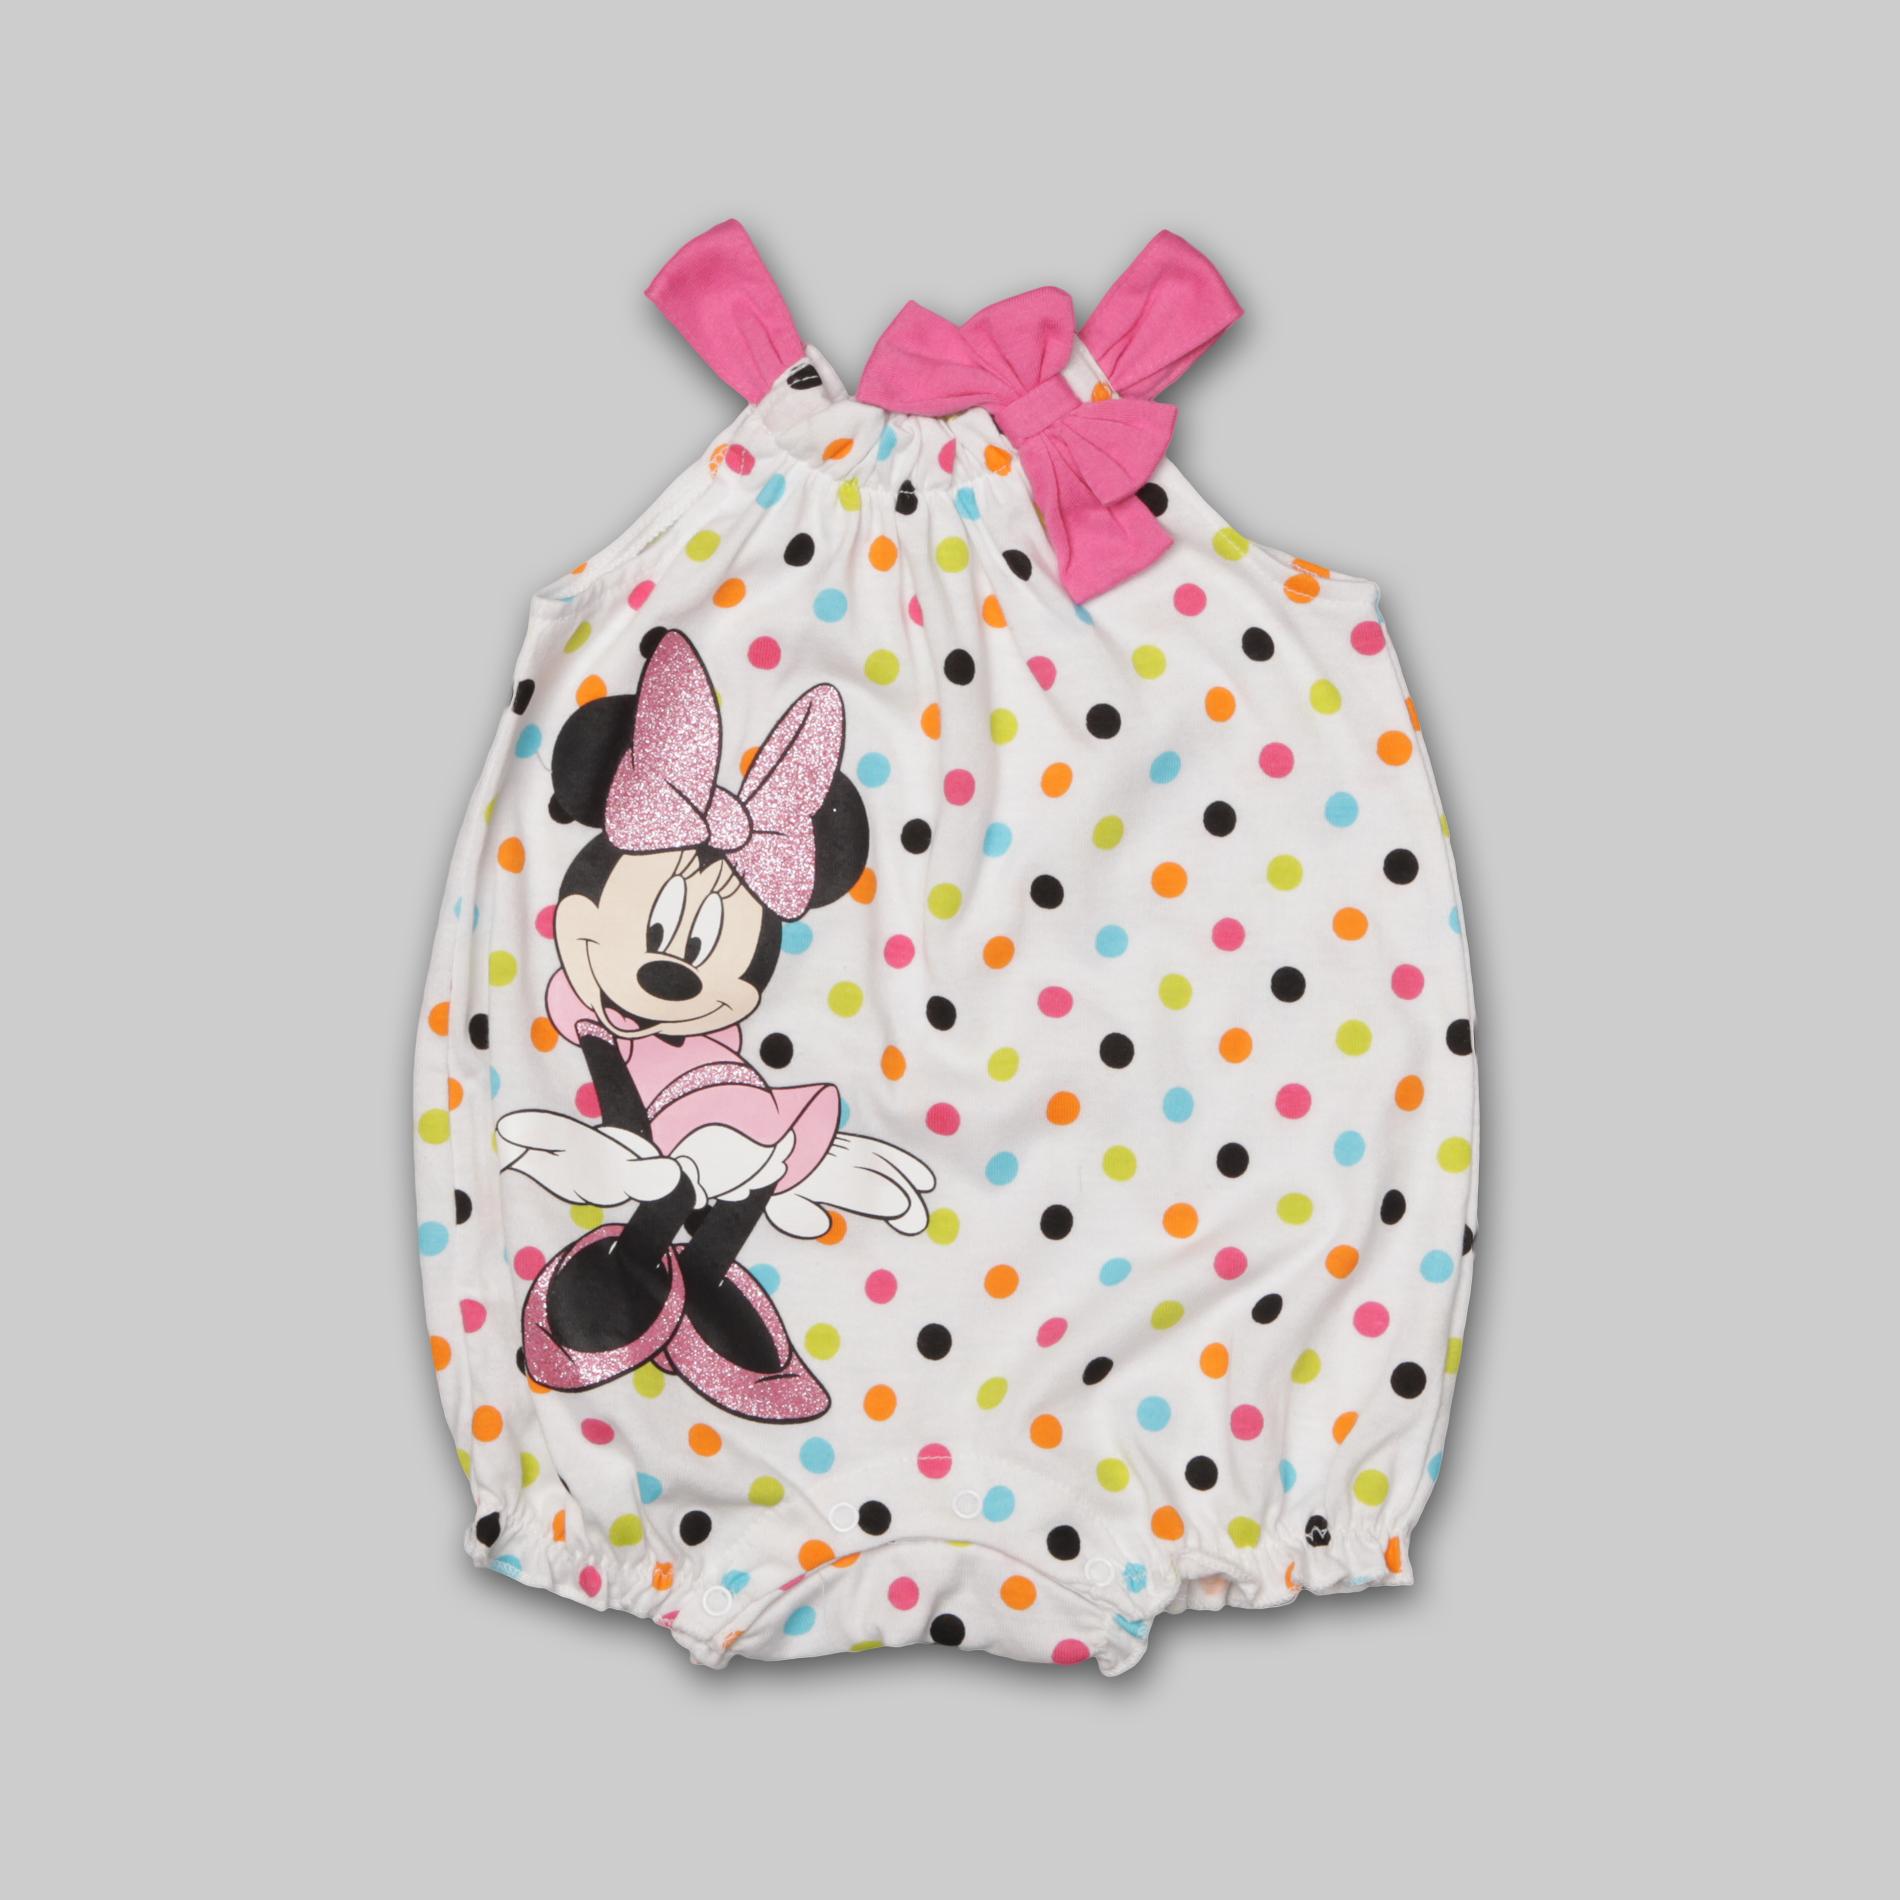 Disney Minnie Mouse Infant Girl's Romper - Polka Dot